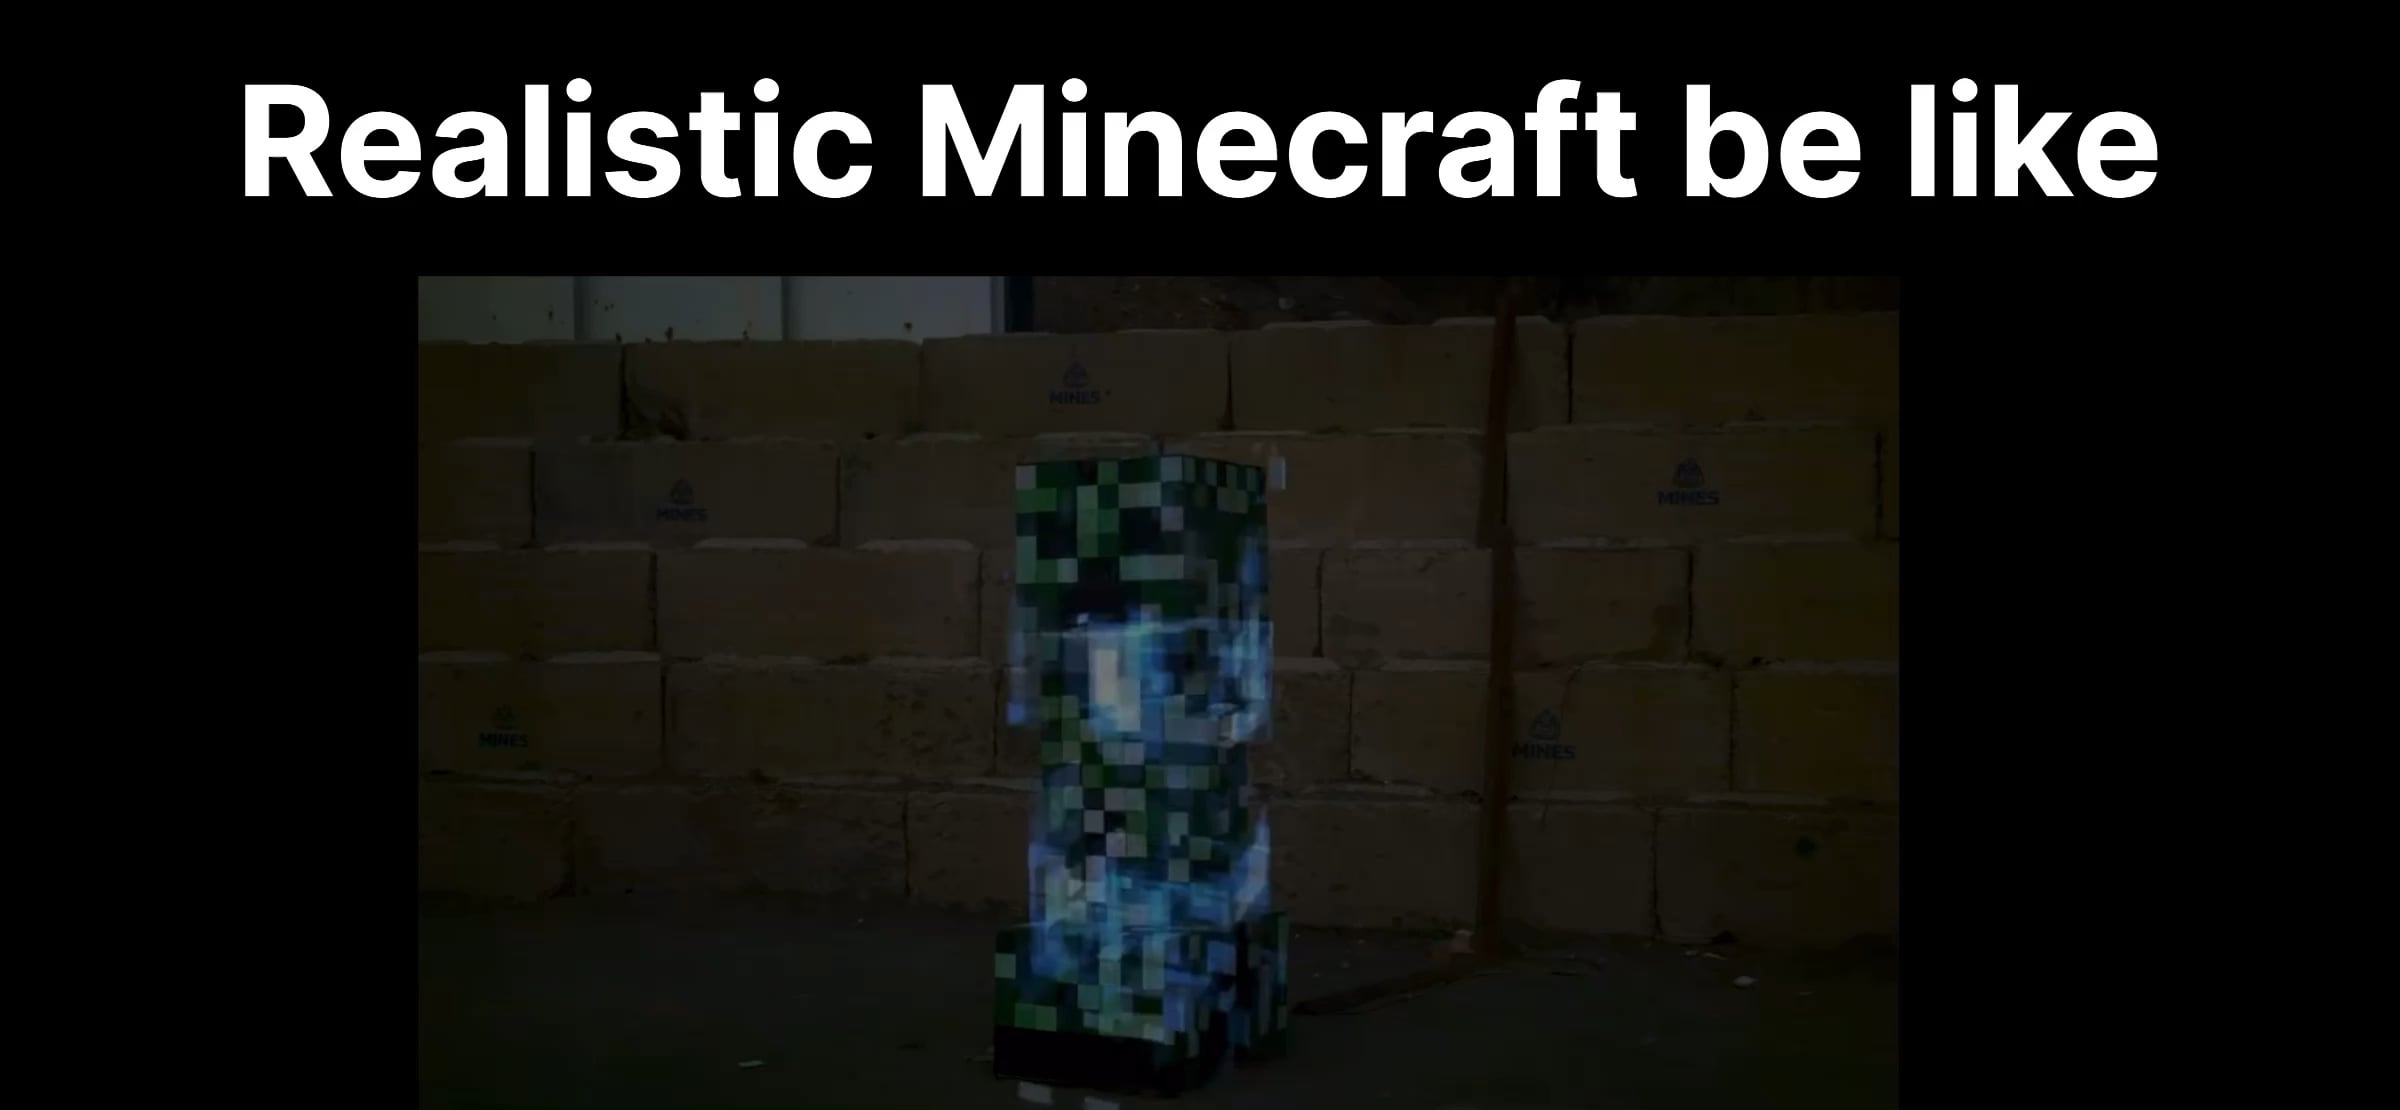 Minecraft Memes - Creeper's Real World Ambush